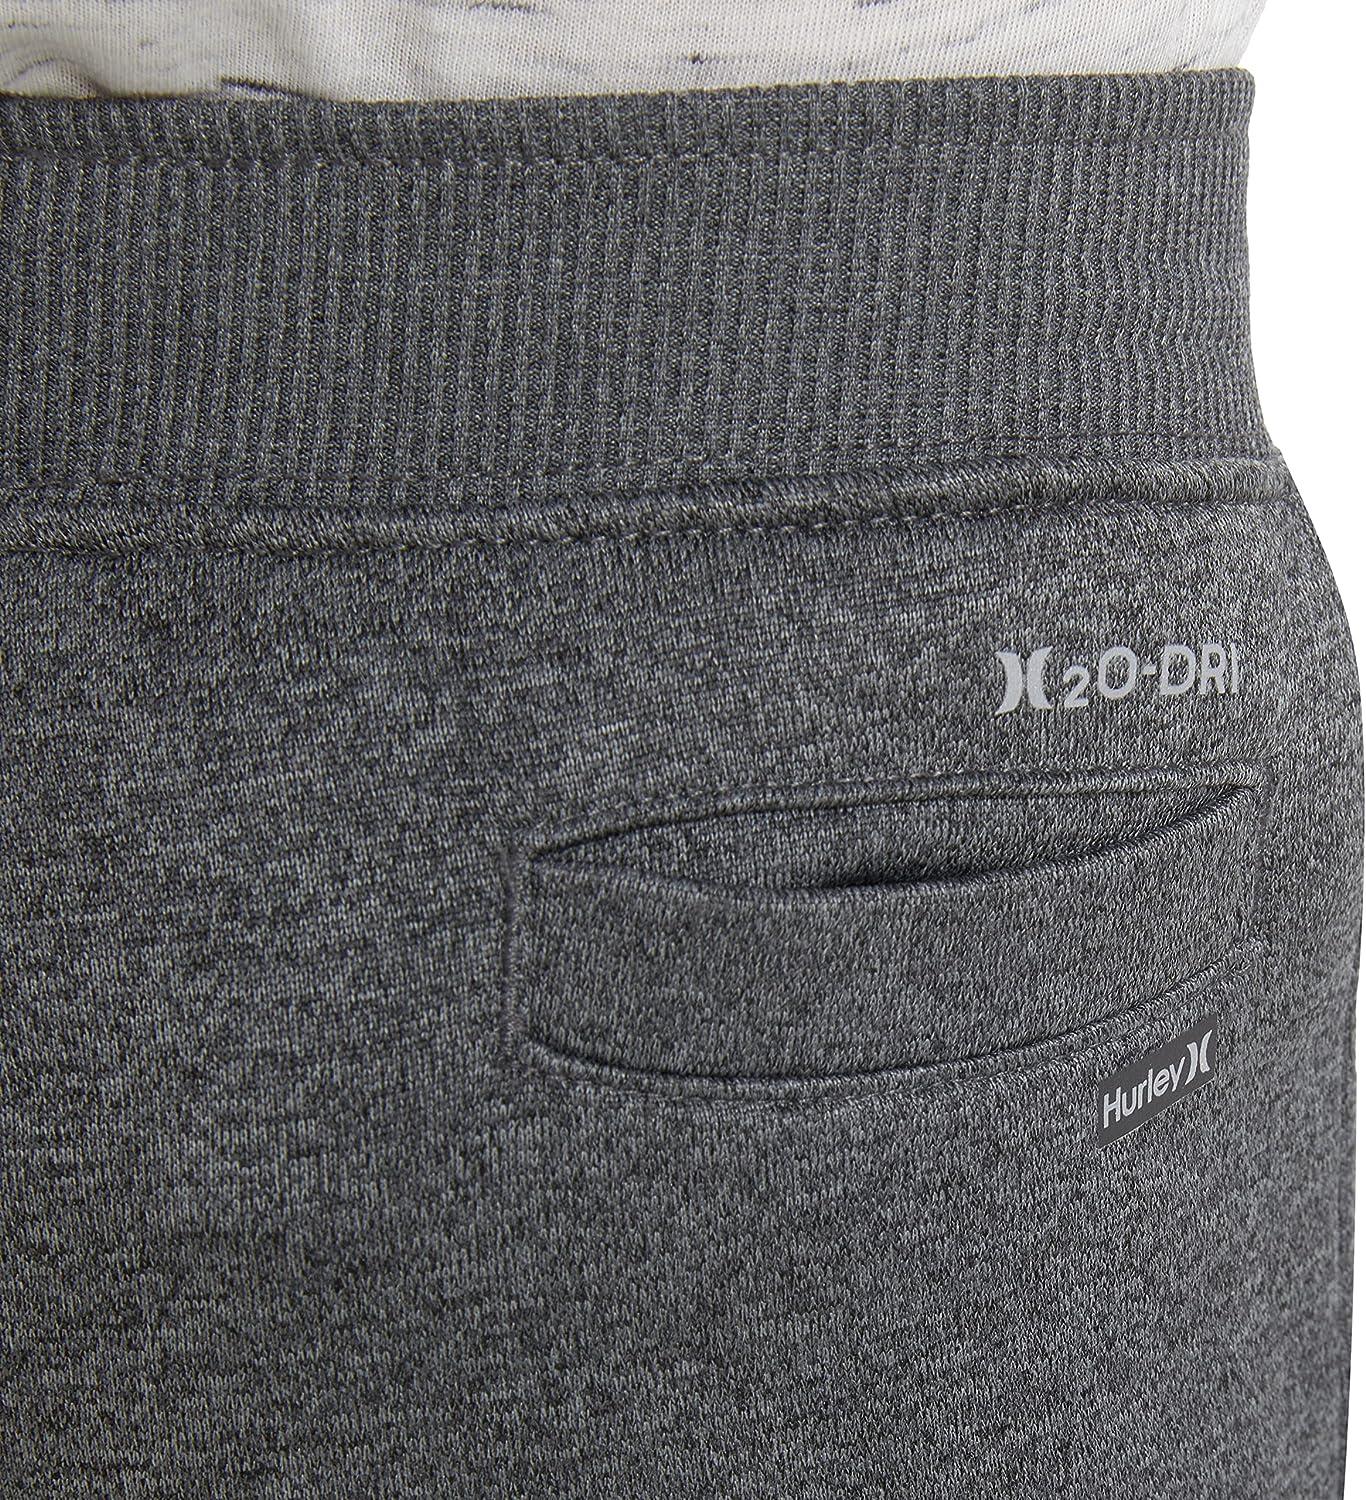 adidas Designed 2 Move Climalite Pants - Grey